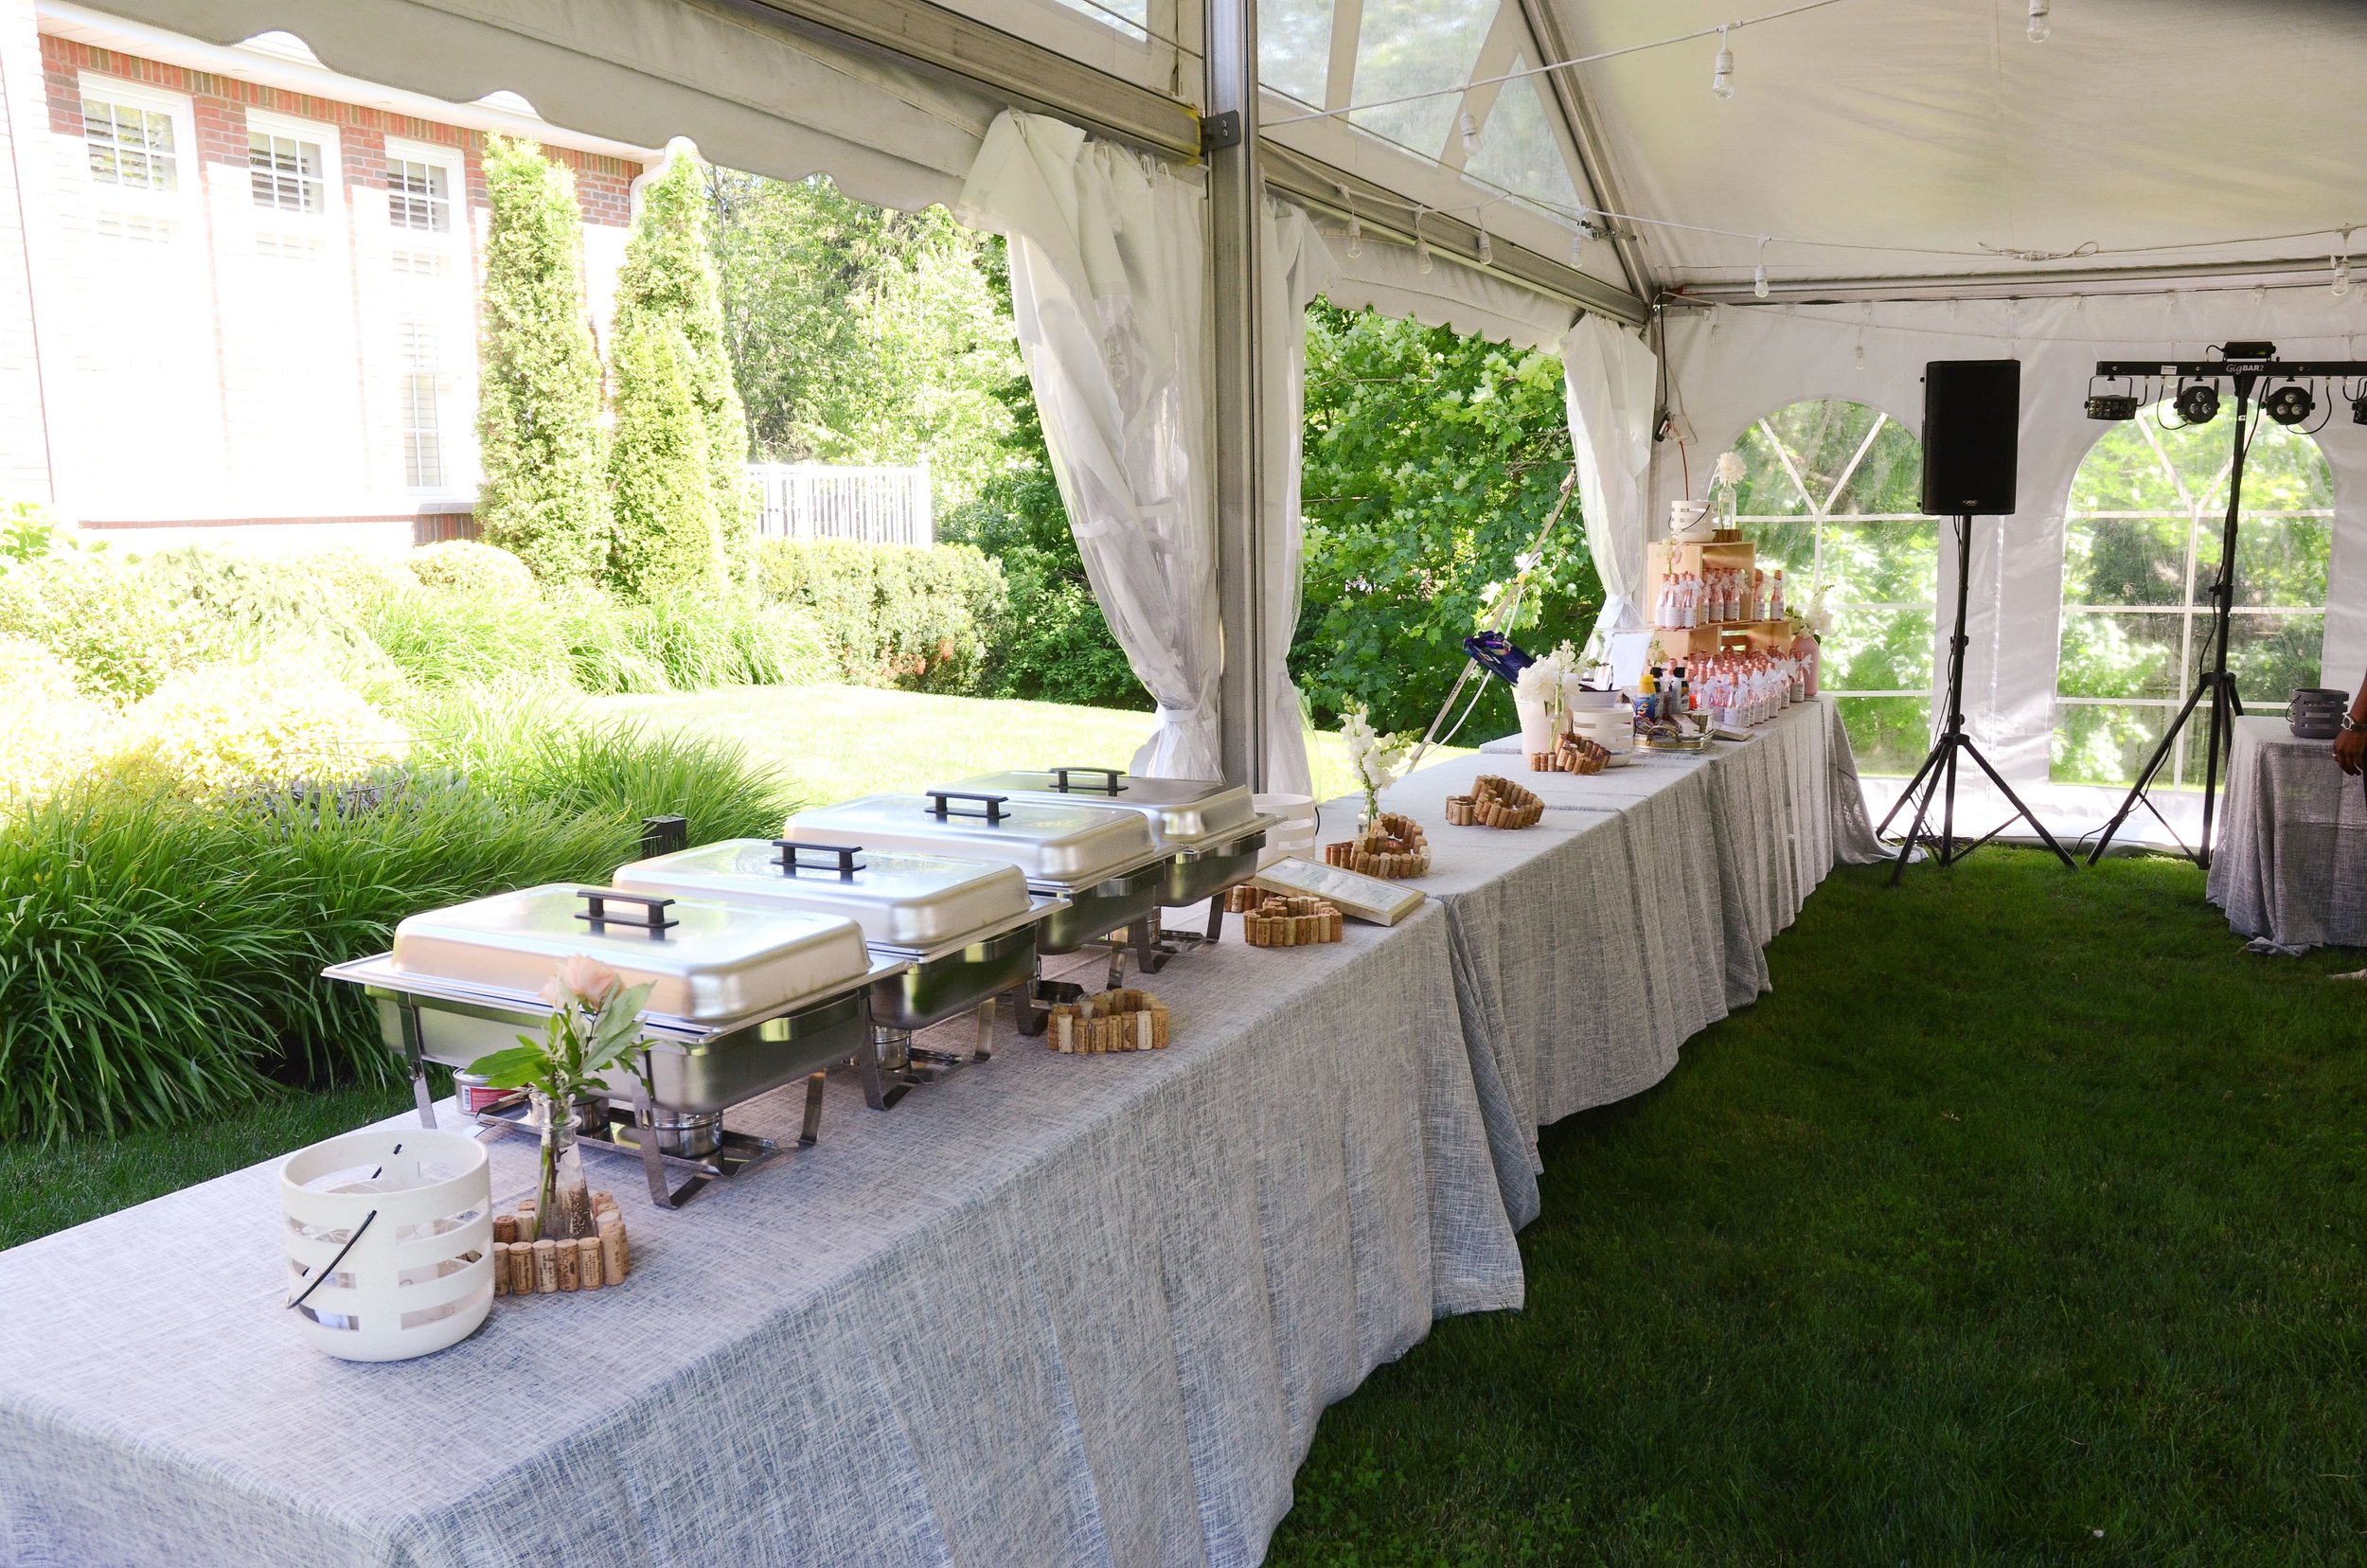 Buffet table at a backyard tented wedding reception